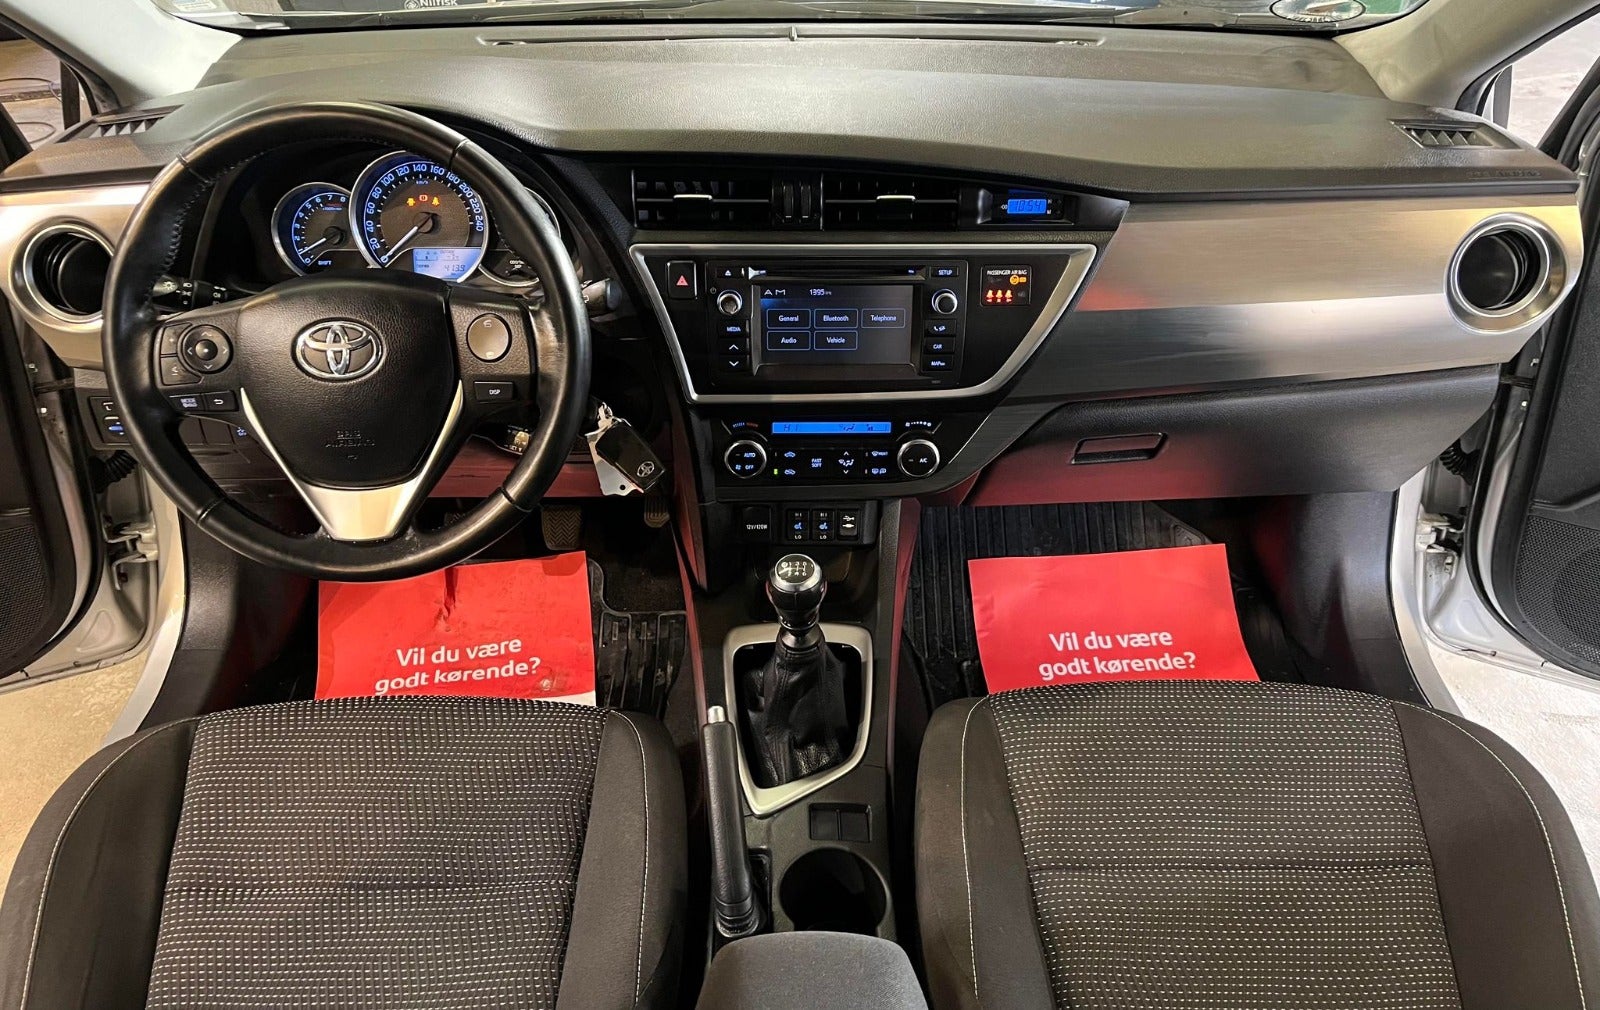 Toyota Auris 1,6 T2 Benzin modelår 2013 km 62000 nysynet ABS